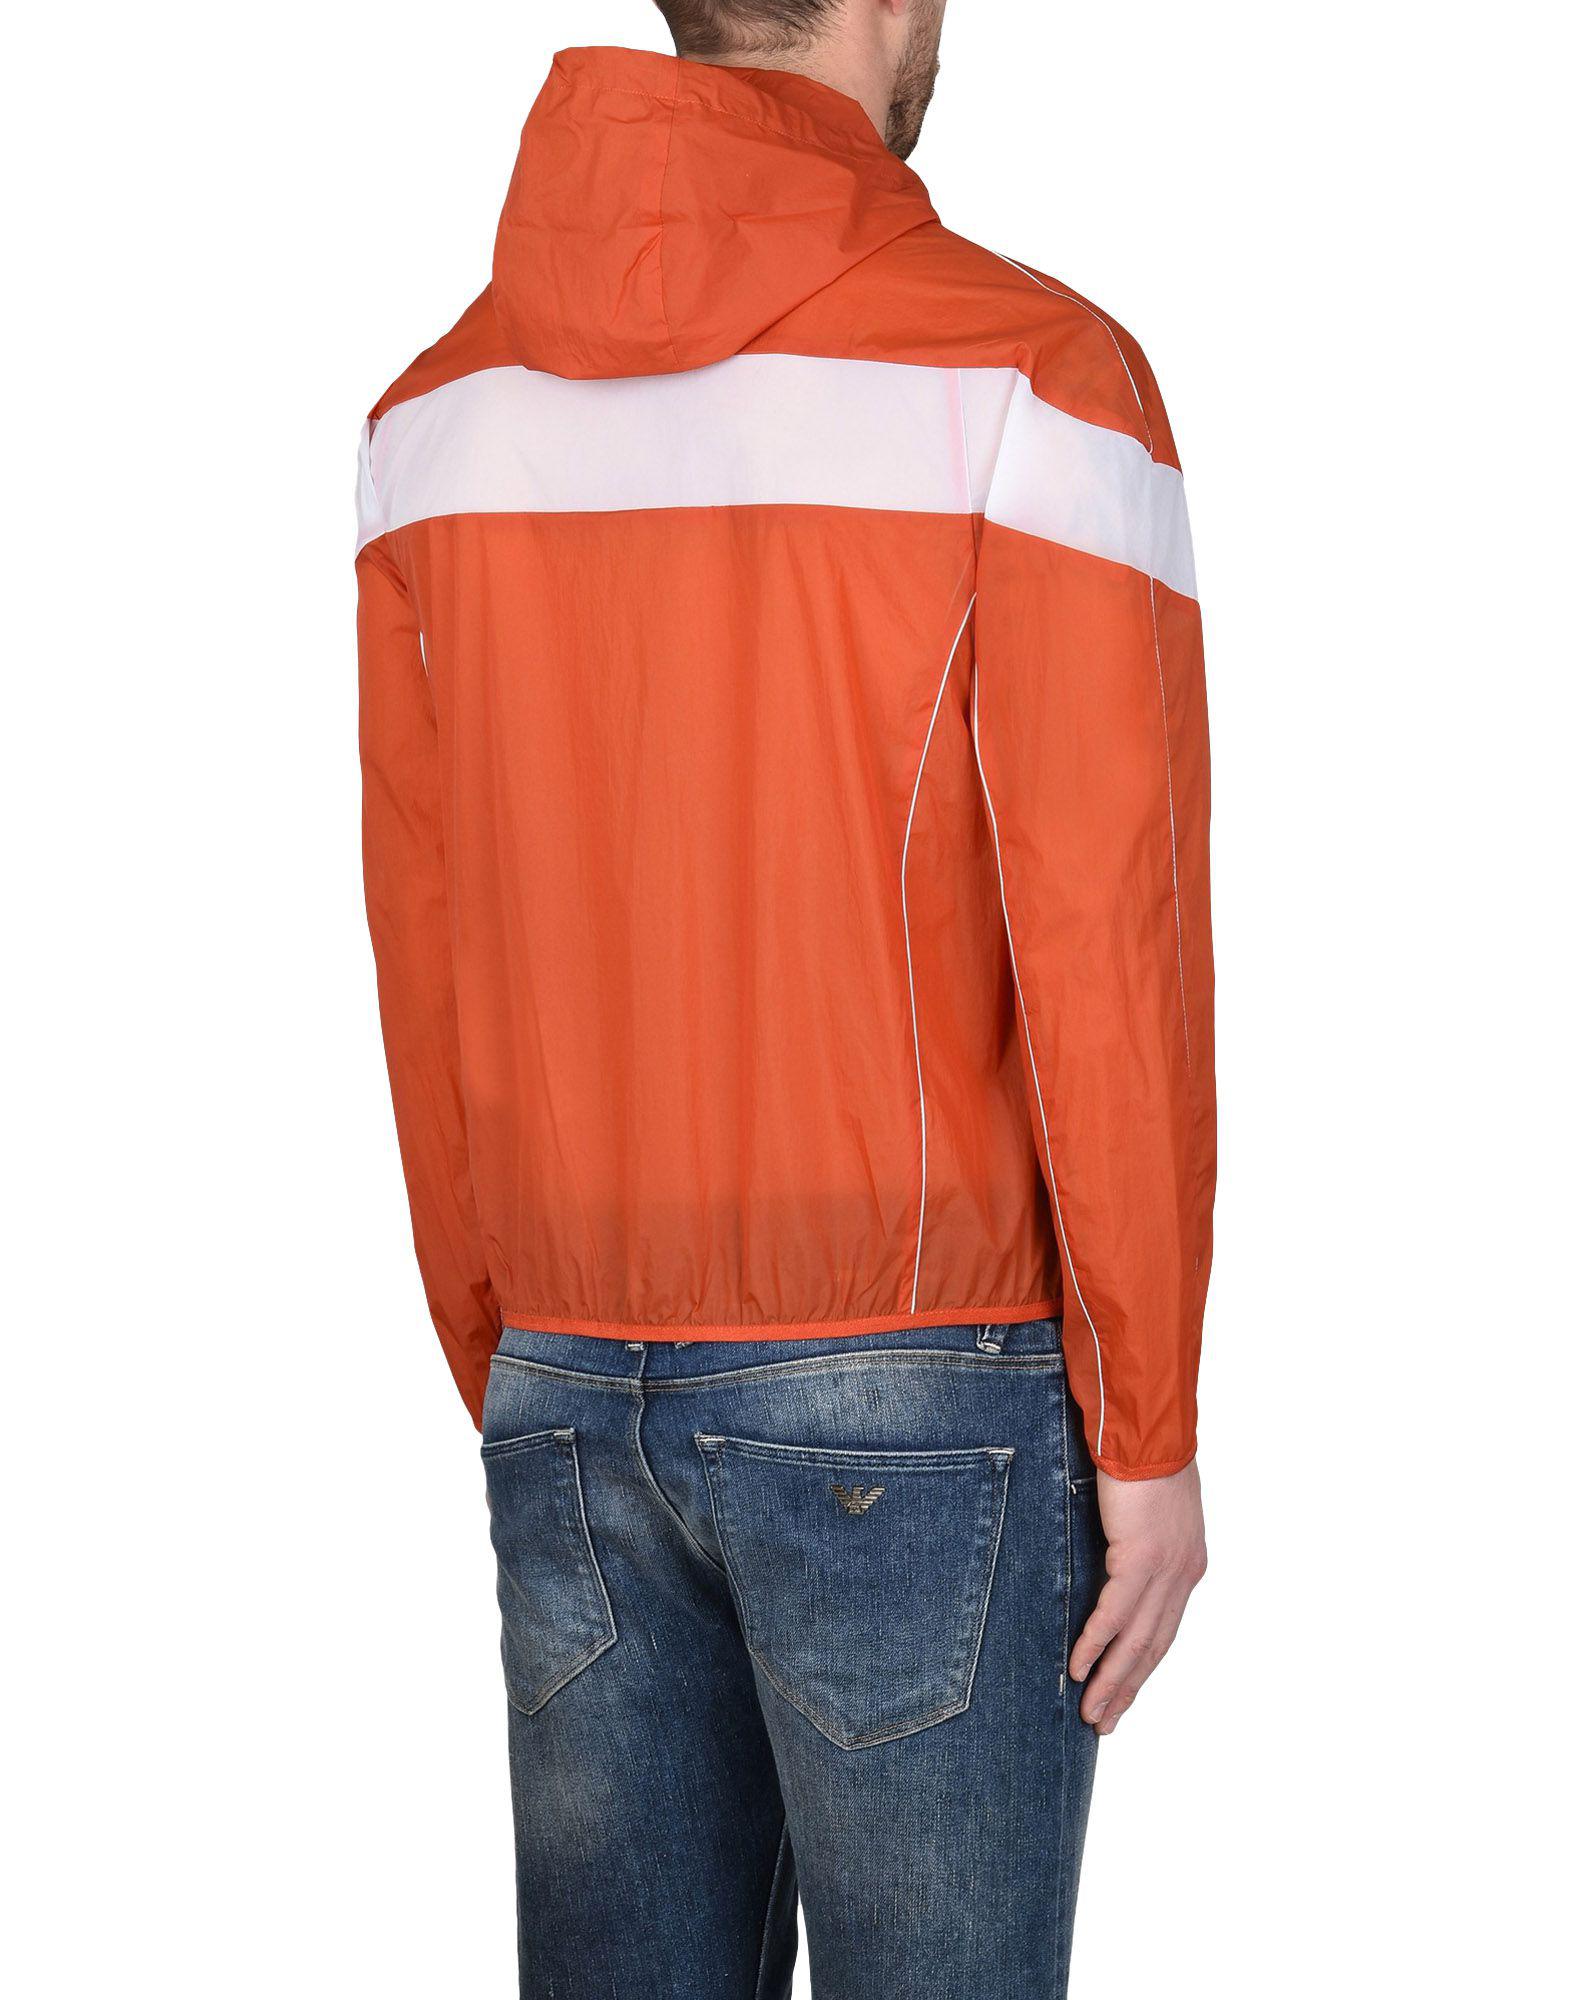 Emporio Armani Synthetic Jacket in Orange for Men - Lyst